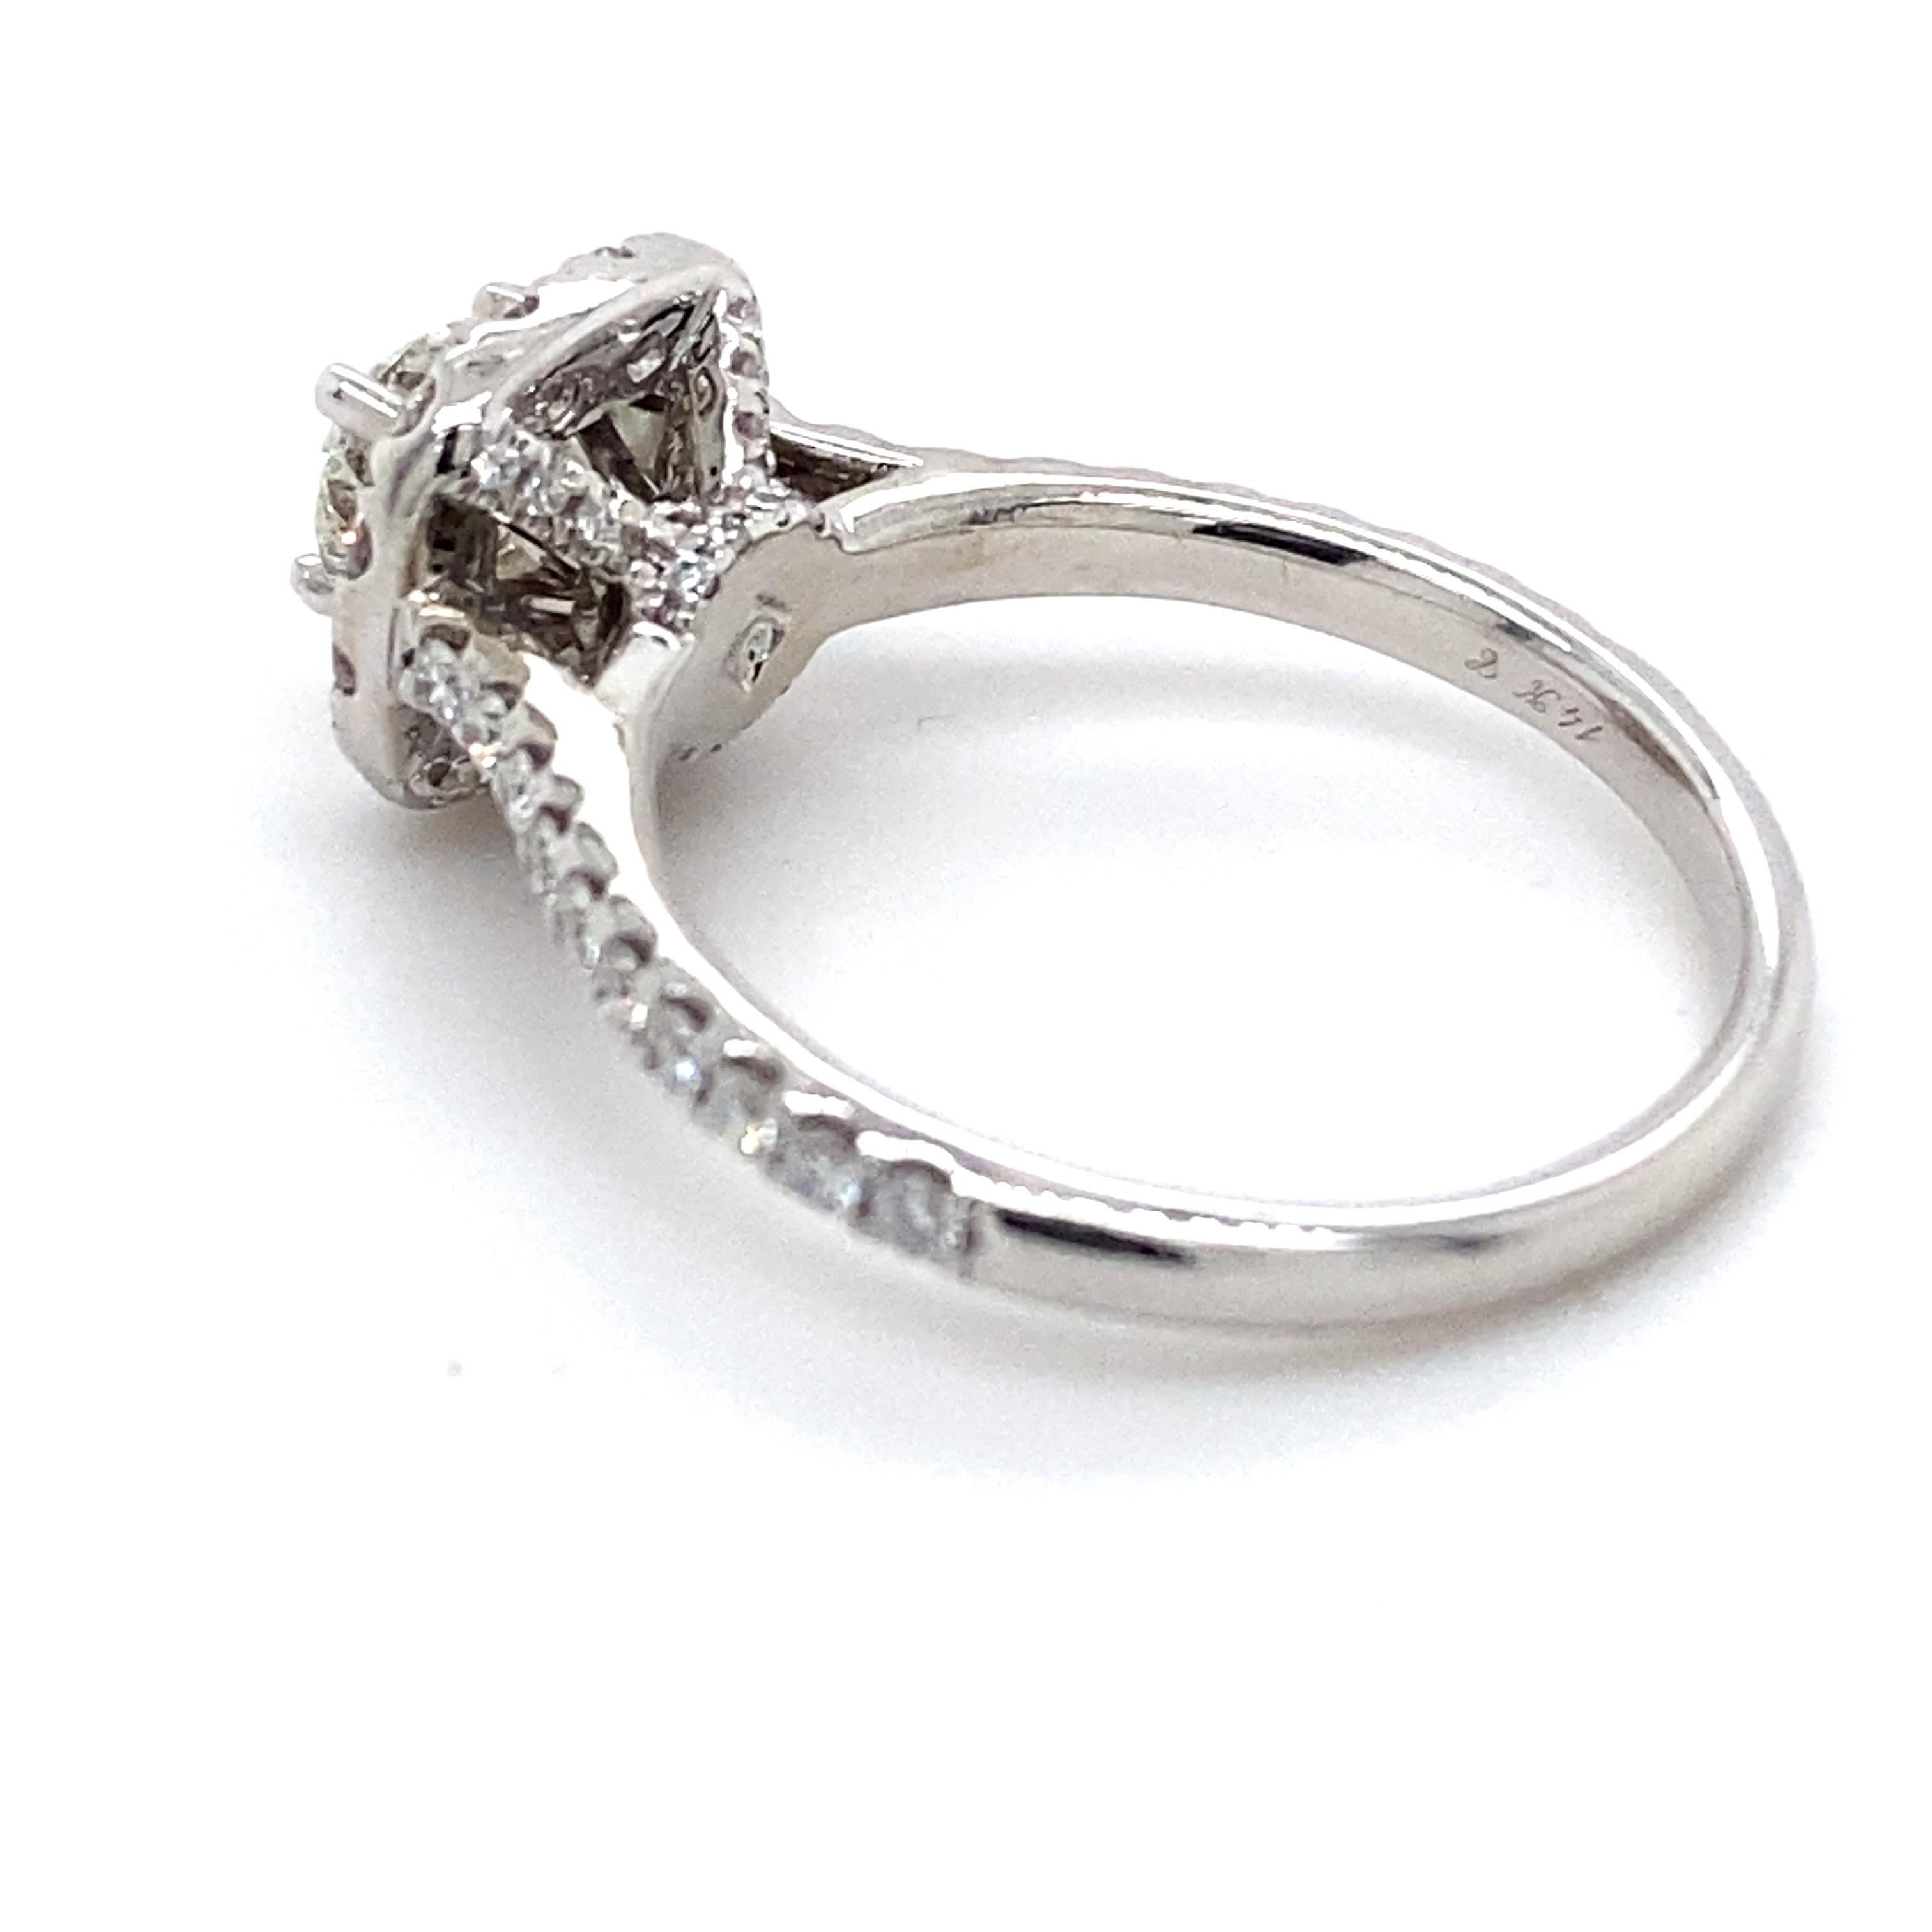 NEIL LANE Round Diamond Halo 1.27 tcw Engagement Ring in 14kt White Gold 1